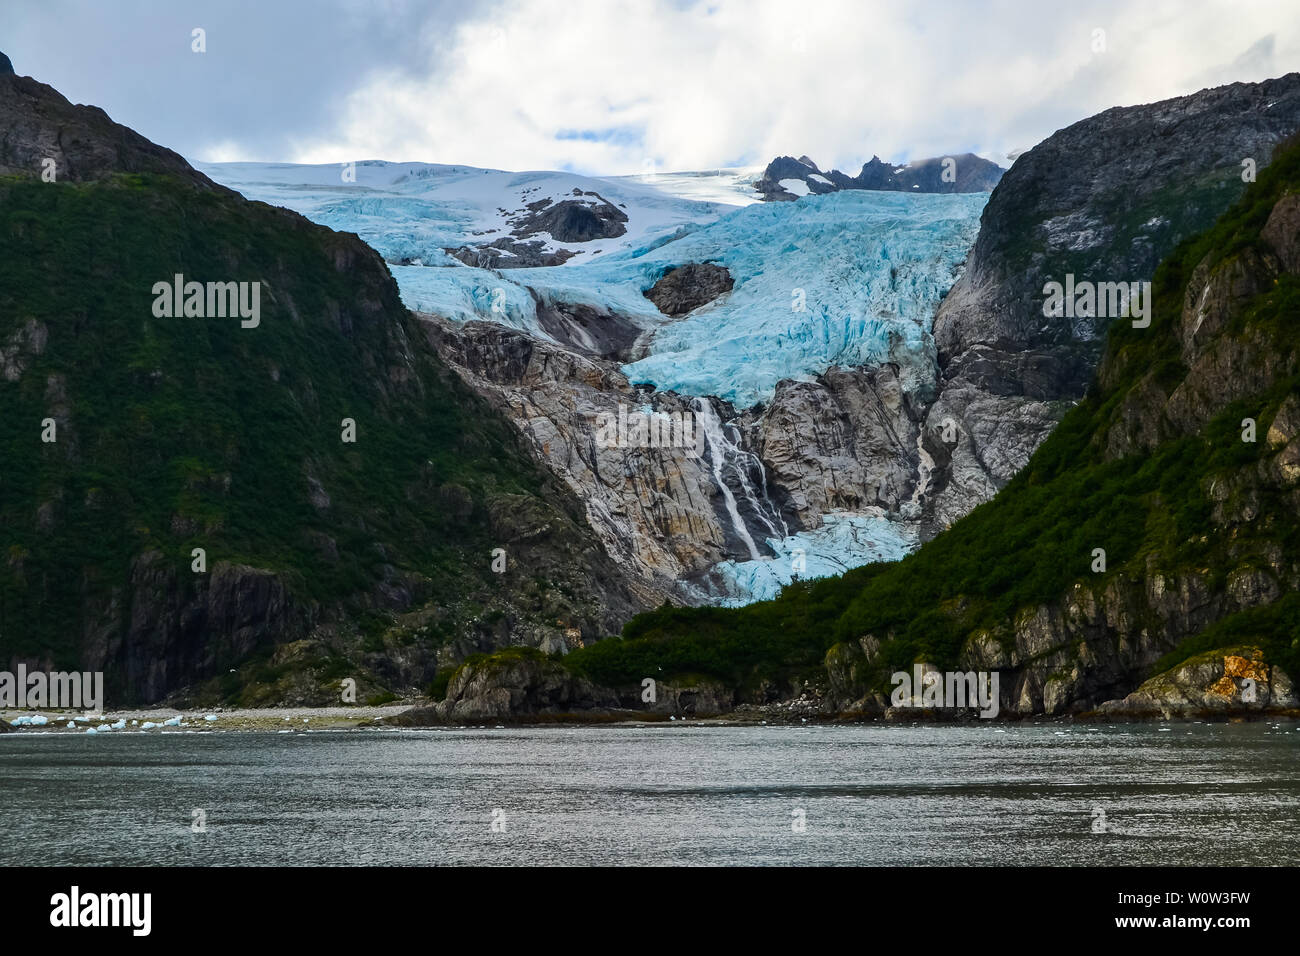 Distant view of a glacier in Kenai fjords National Park, Seward, Alaska, United States, North America. Stock Photo